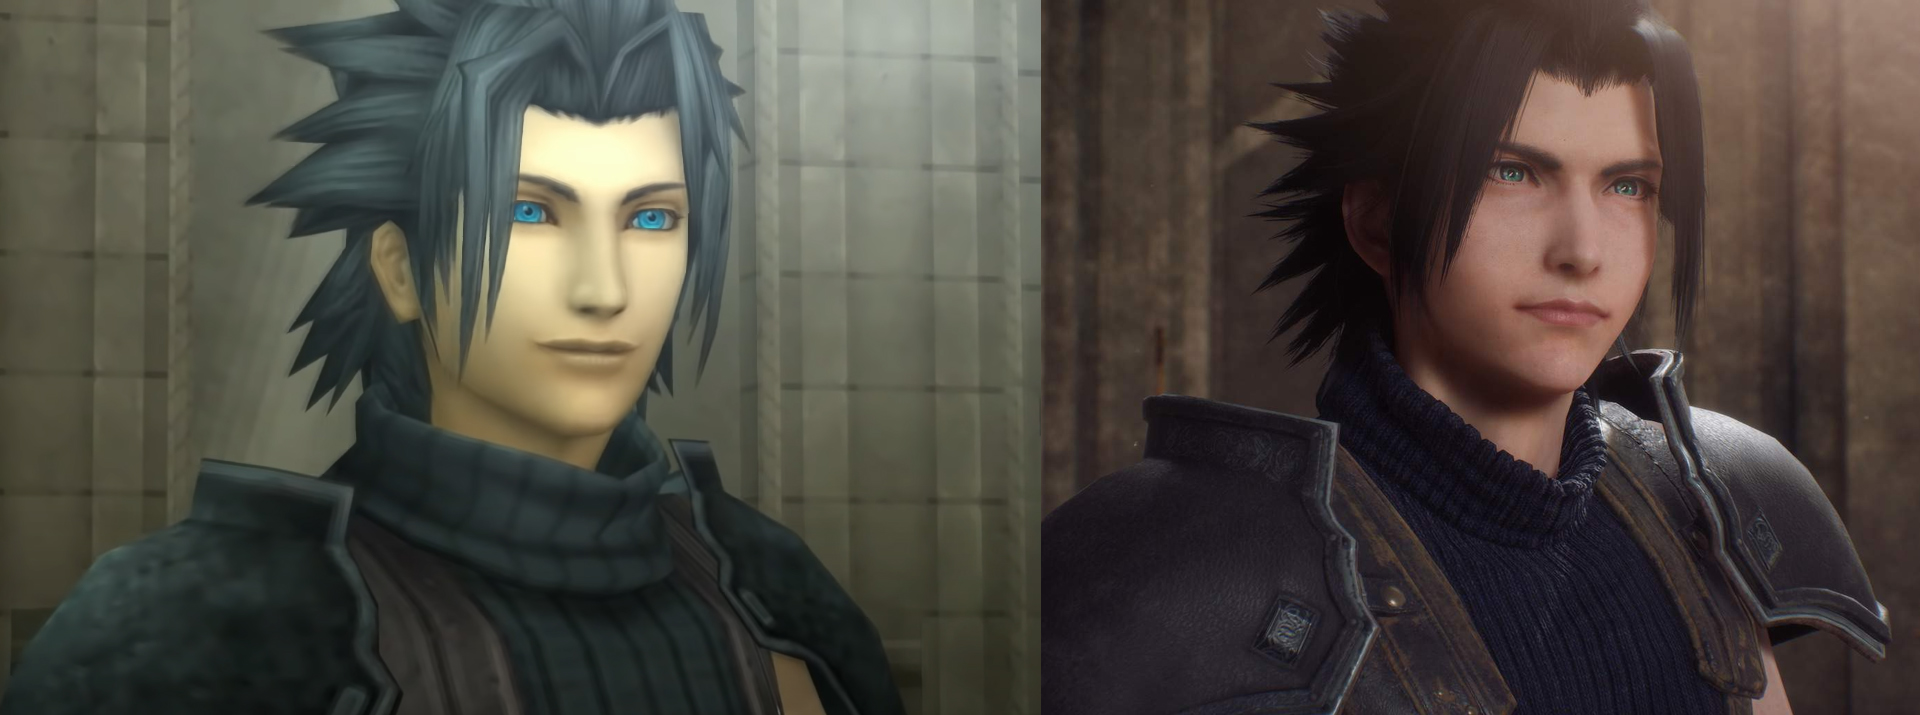 Zack Fair remake PSP comparison